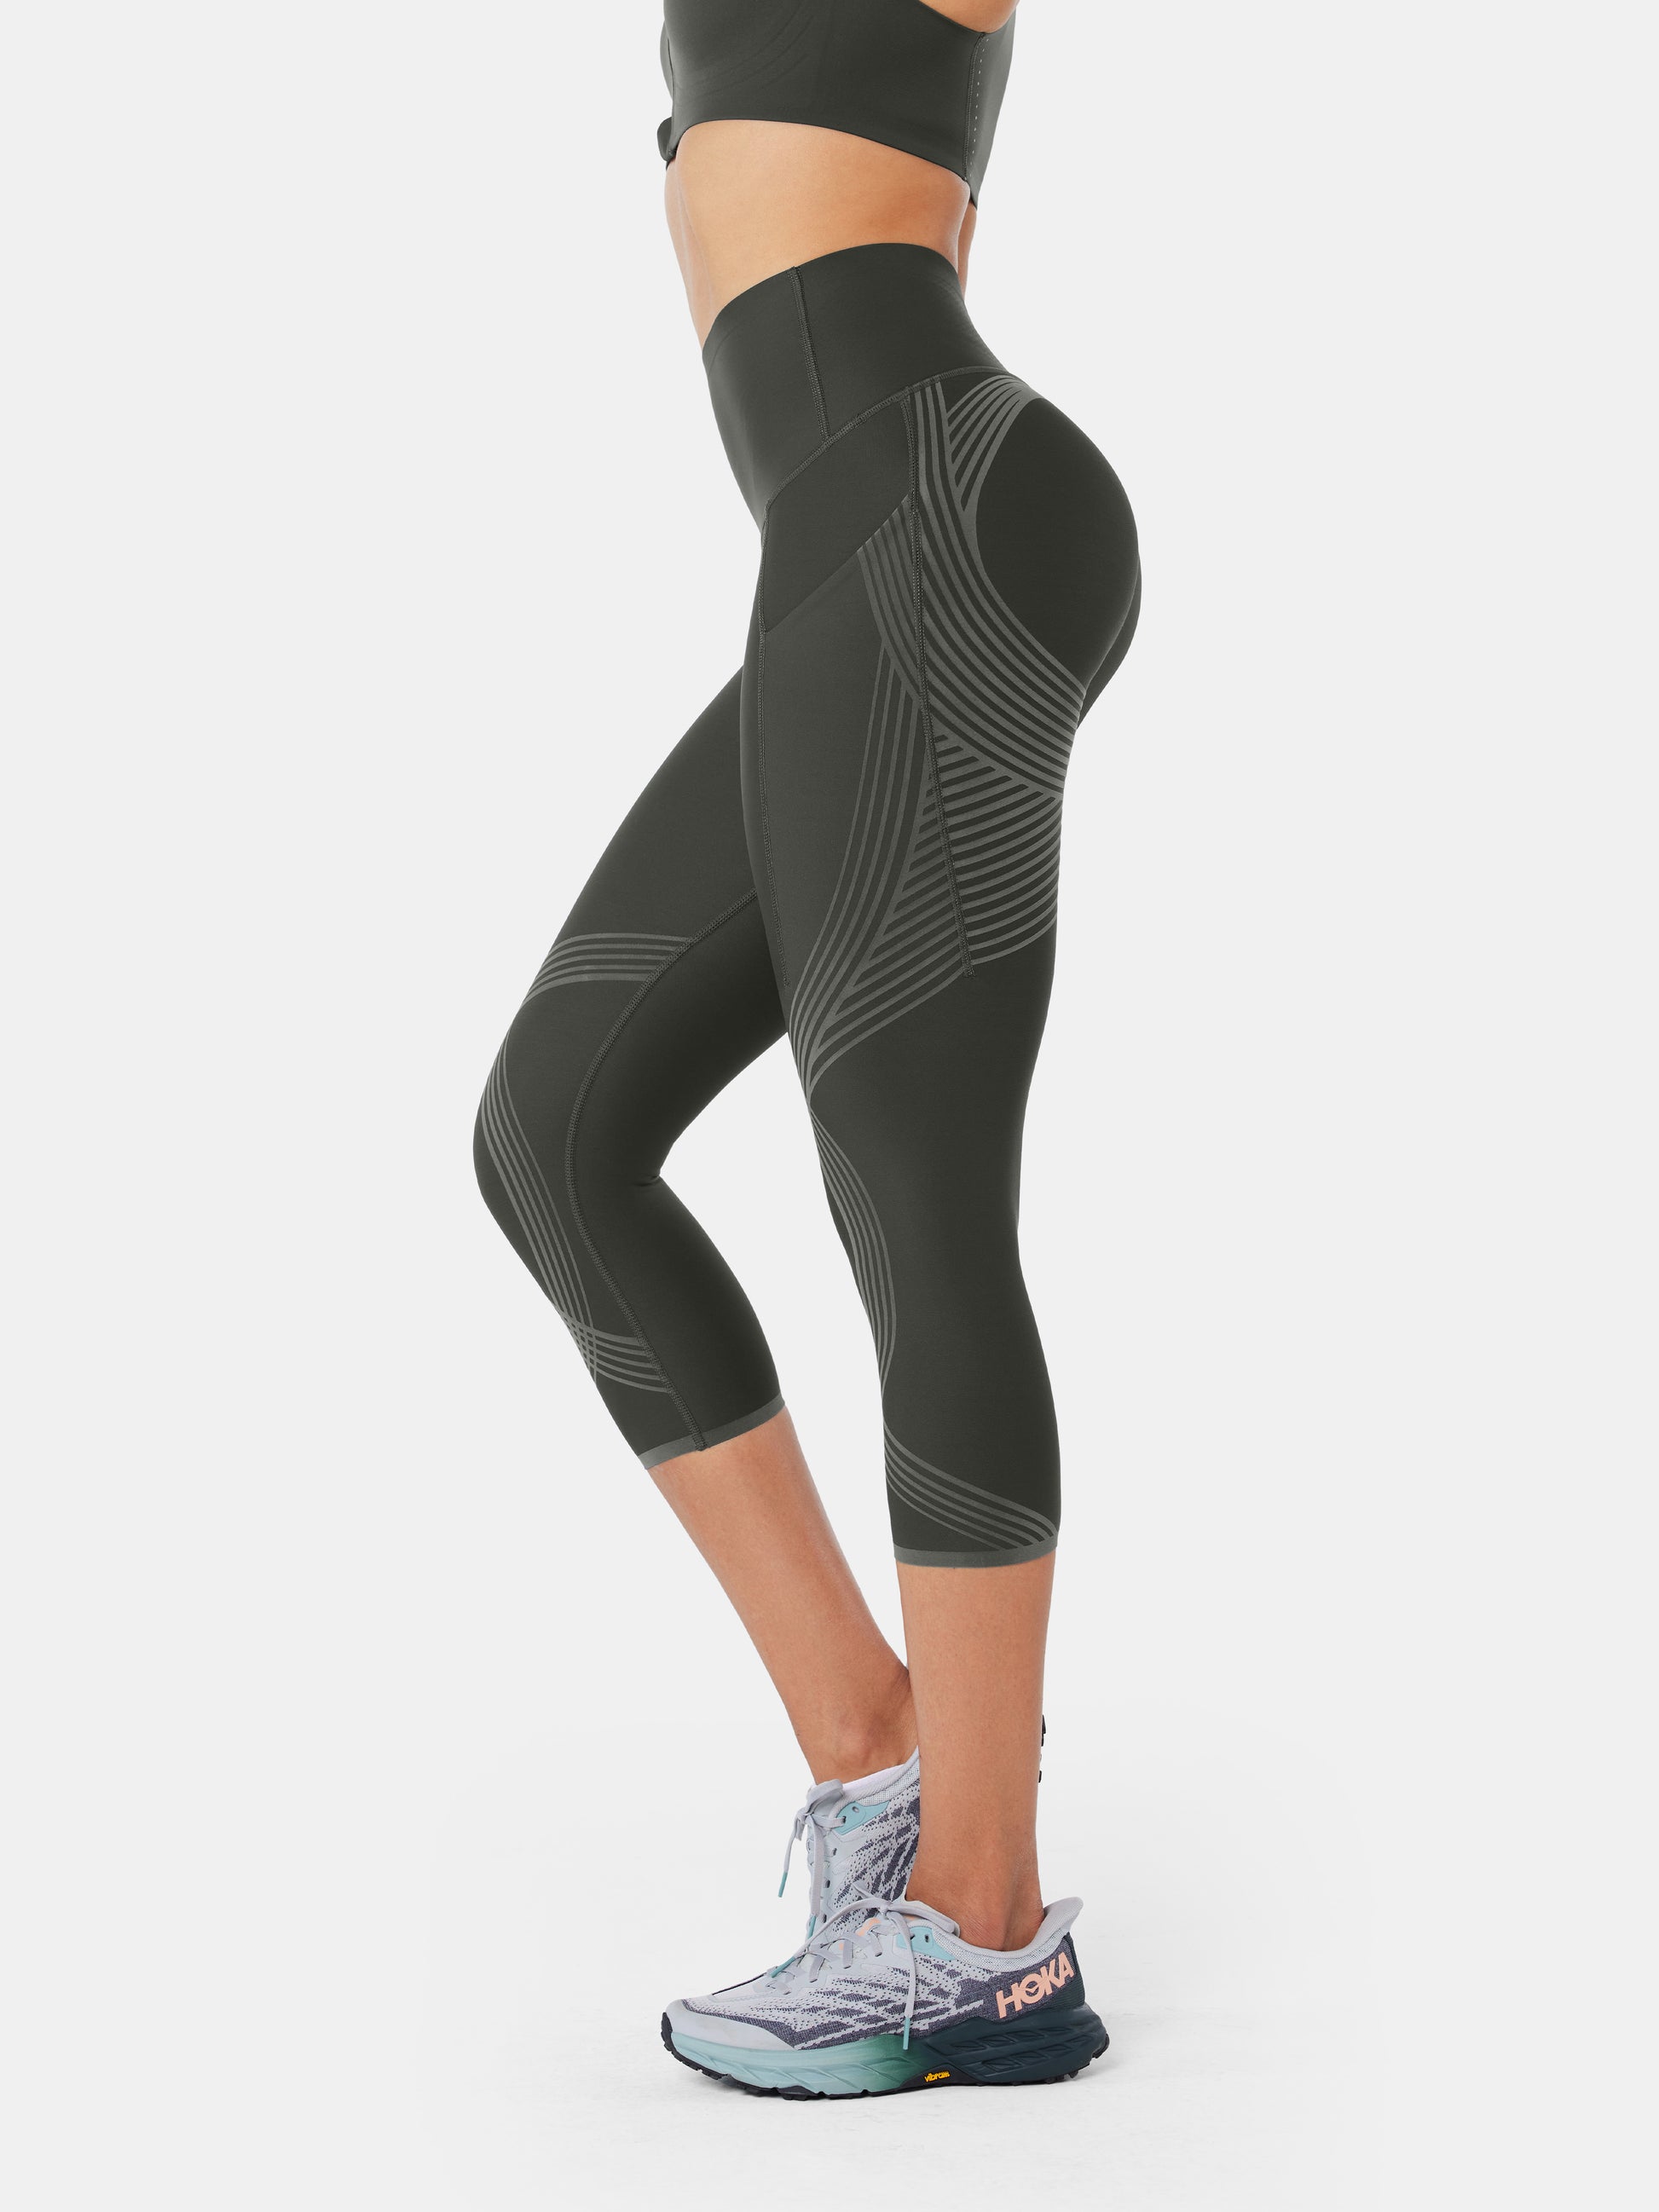 Women's charcoal grey active high rise capri leggings workout leggings. -  Flattening elasticized waistband with interior pocket and back zipper  pocket - Figure sculpting skinny leg design - Exterior side pocket along